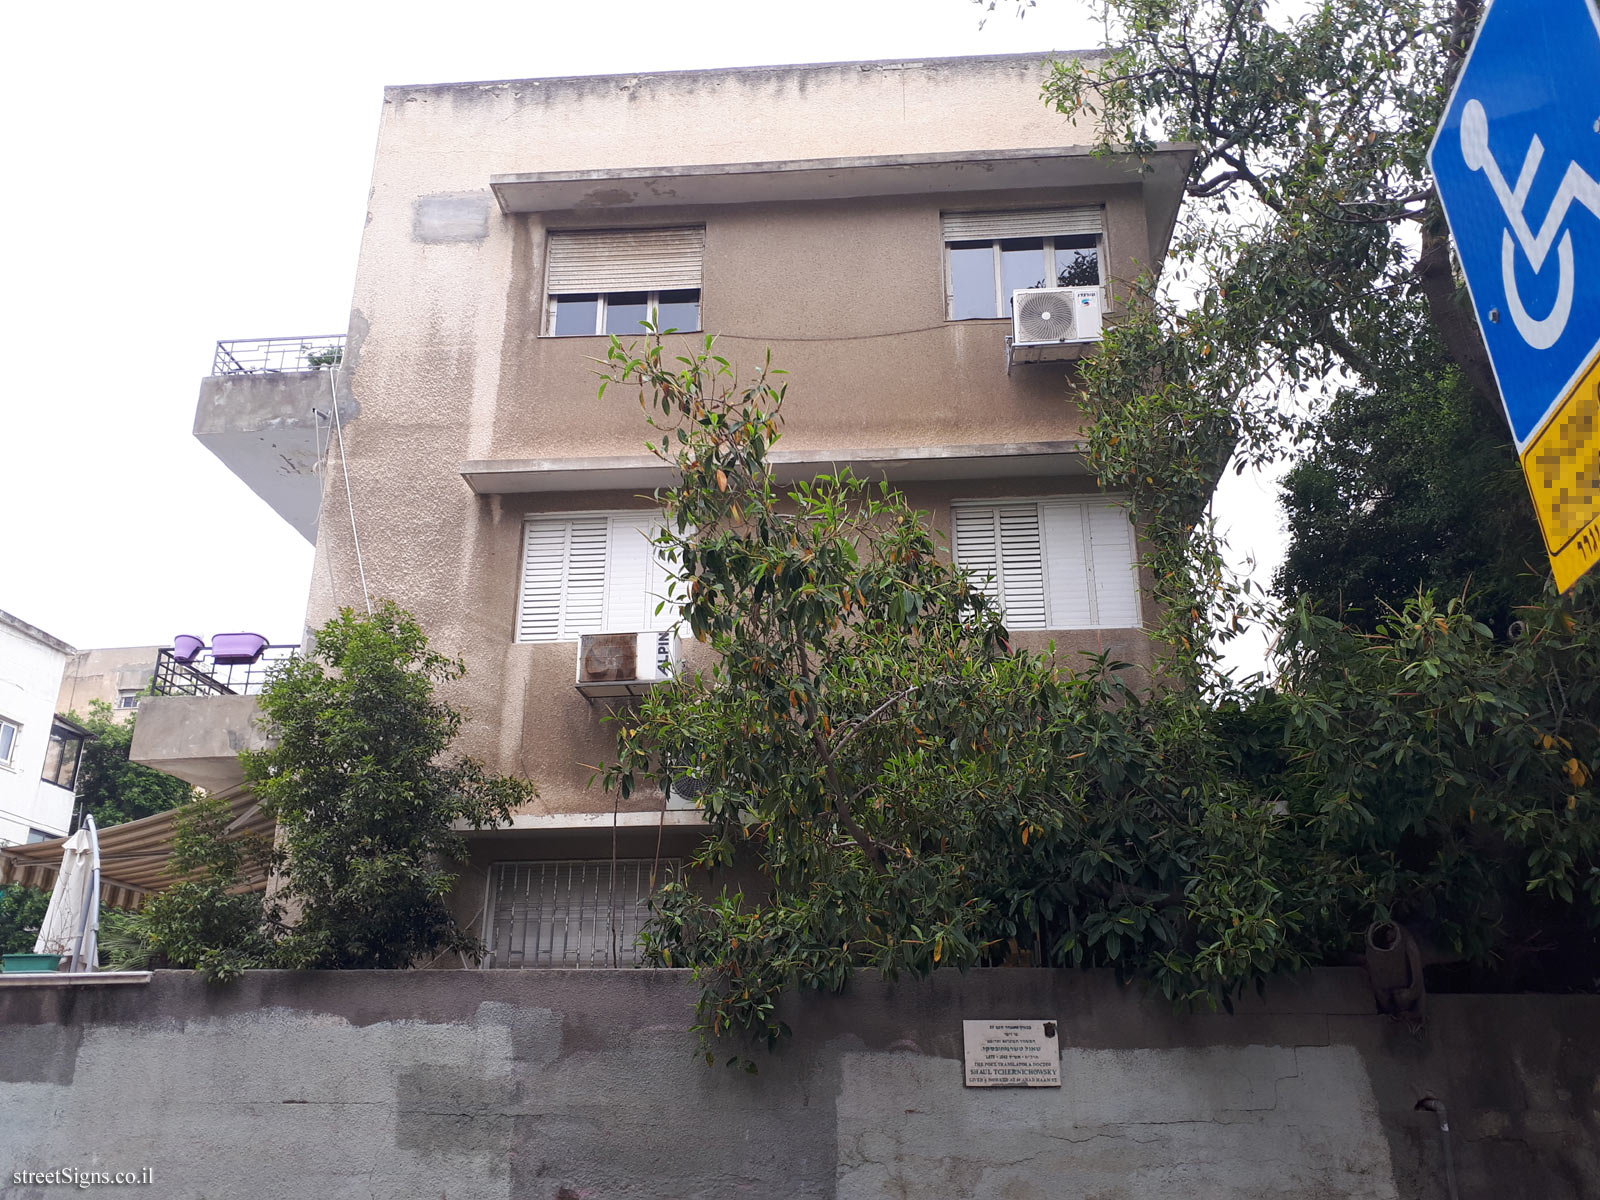 The house of Shaul Tchernichowsky - Ahad Ha’Am St 89, Tel Aviv-Yafo